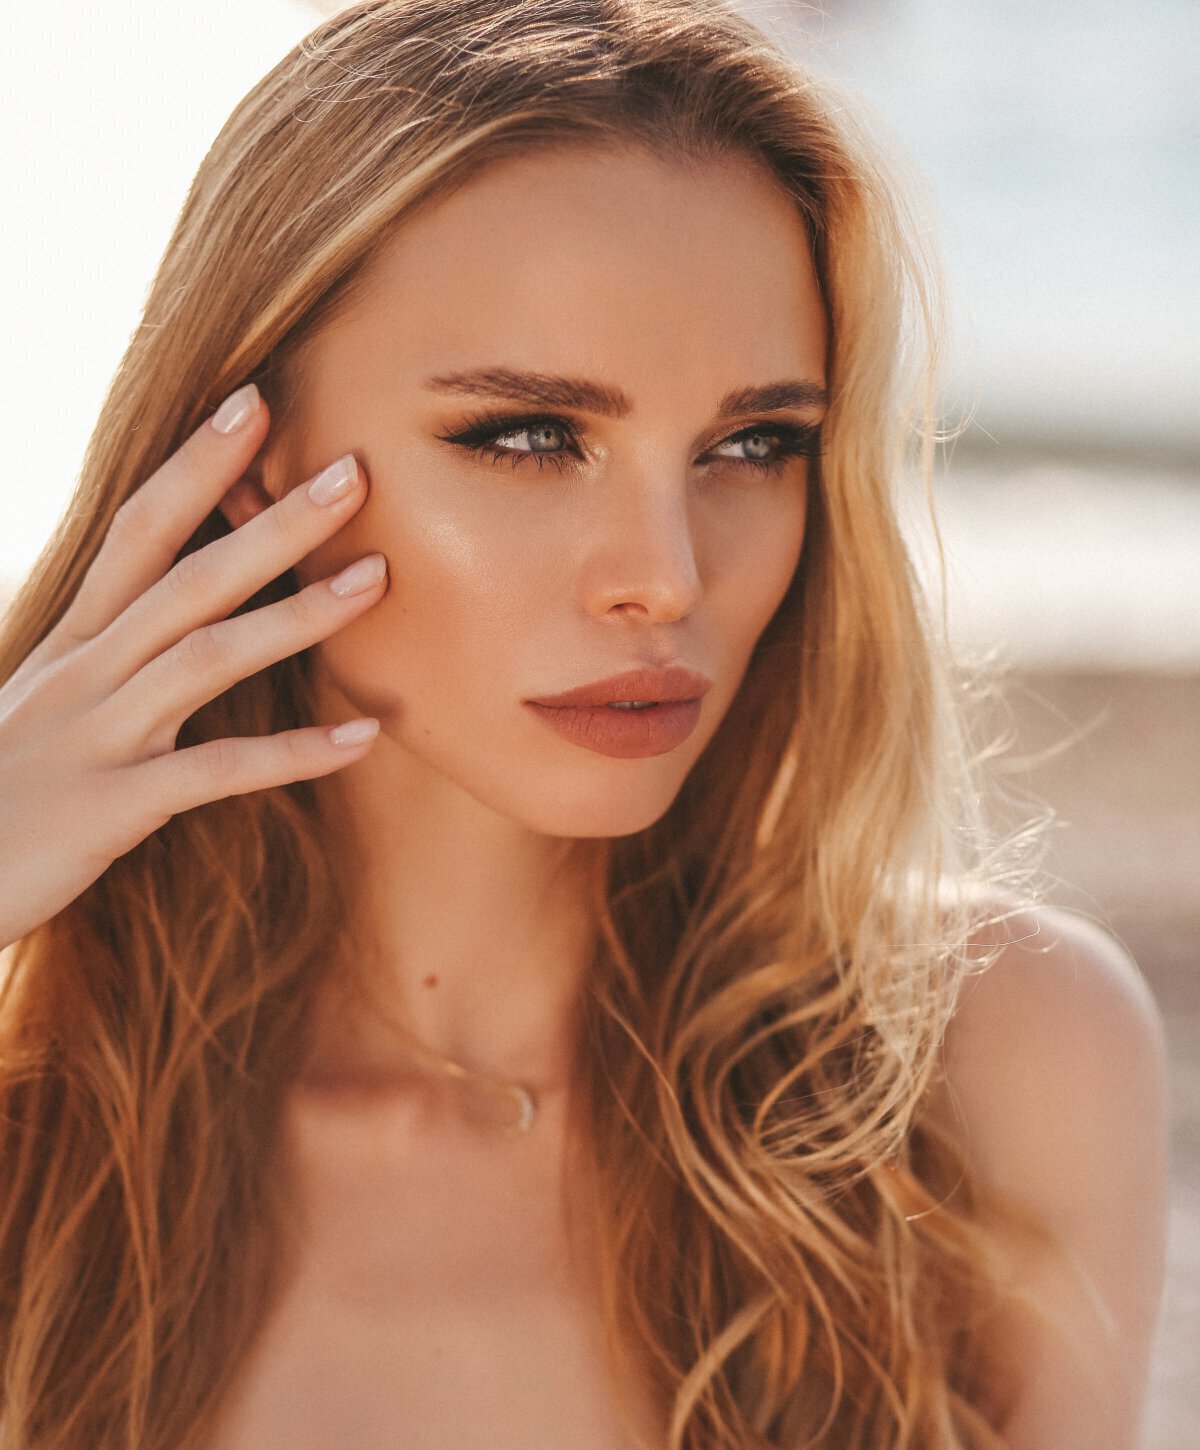 Vero Beach acne scar laser treatment model with blonde hair